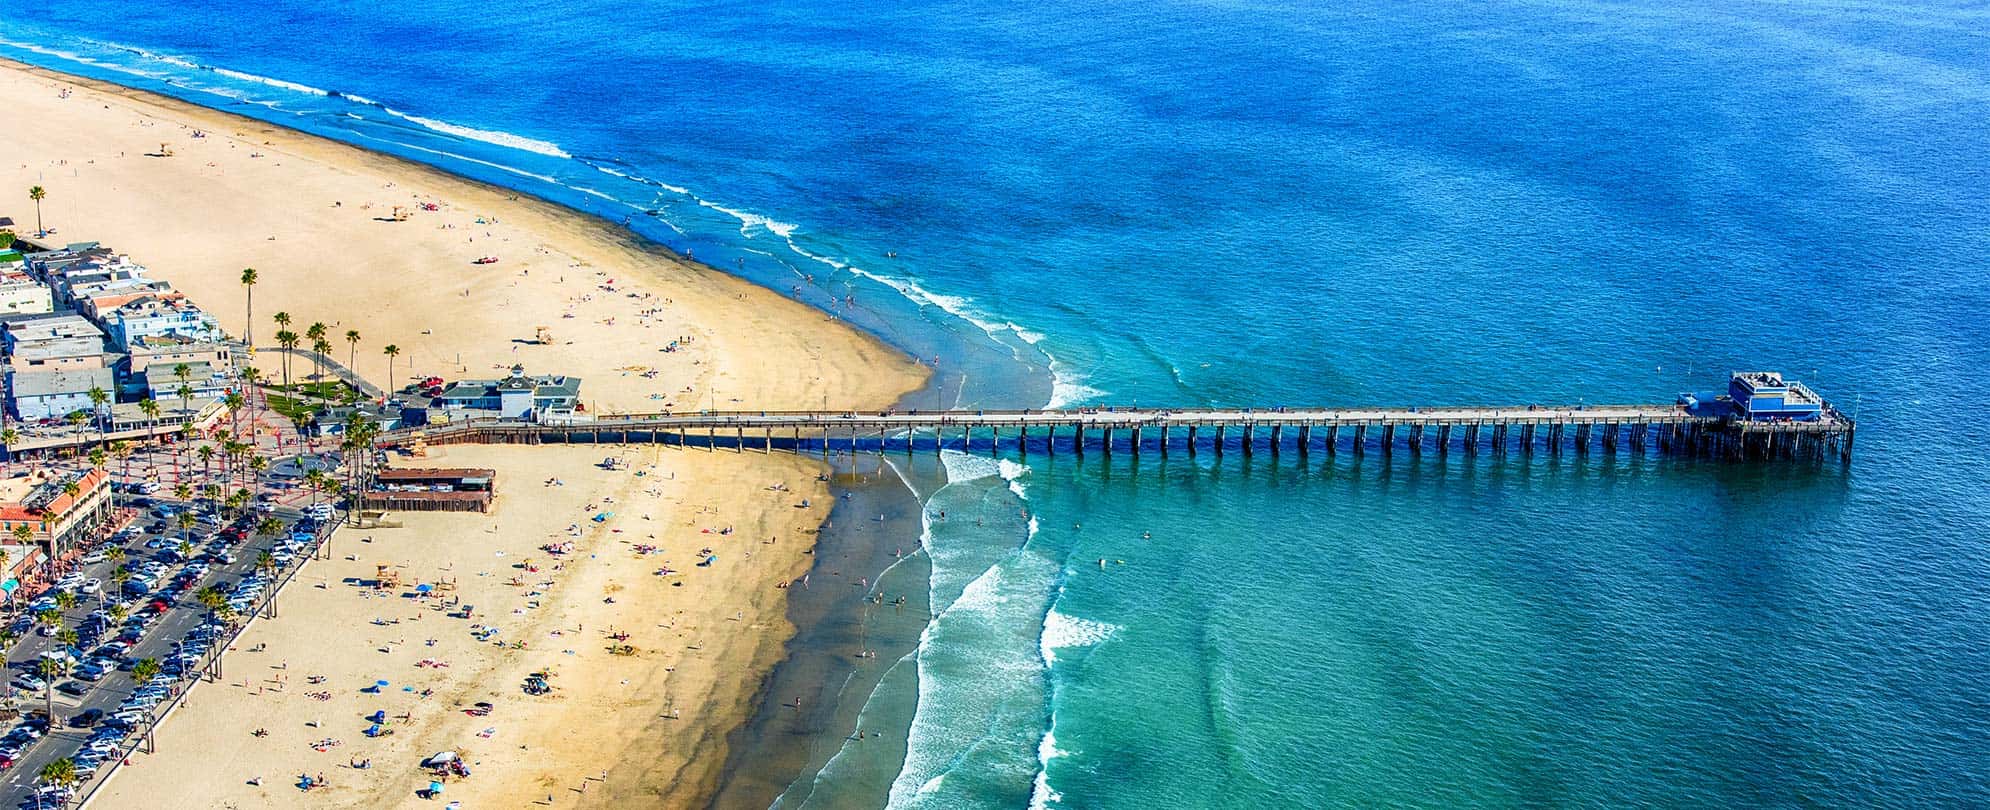 Sand, ocean, and pier at Newport Beach in California.